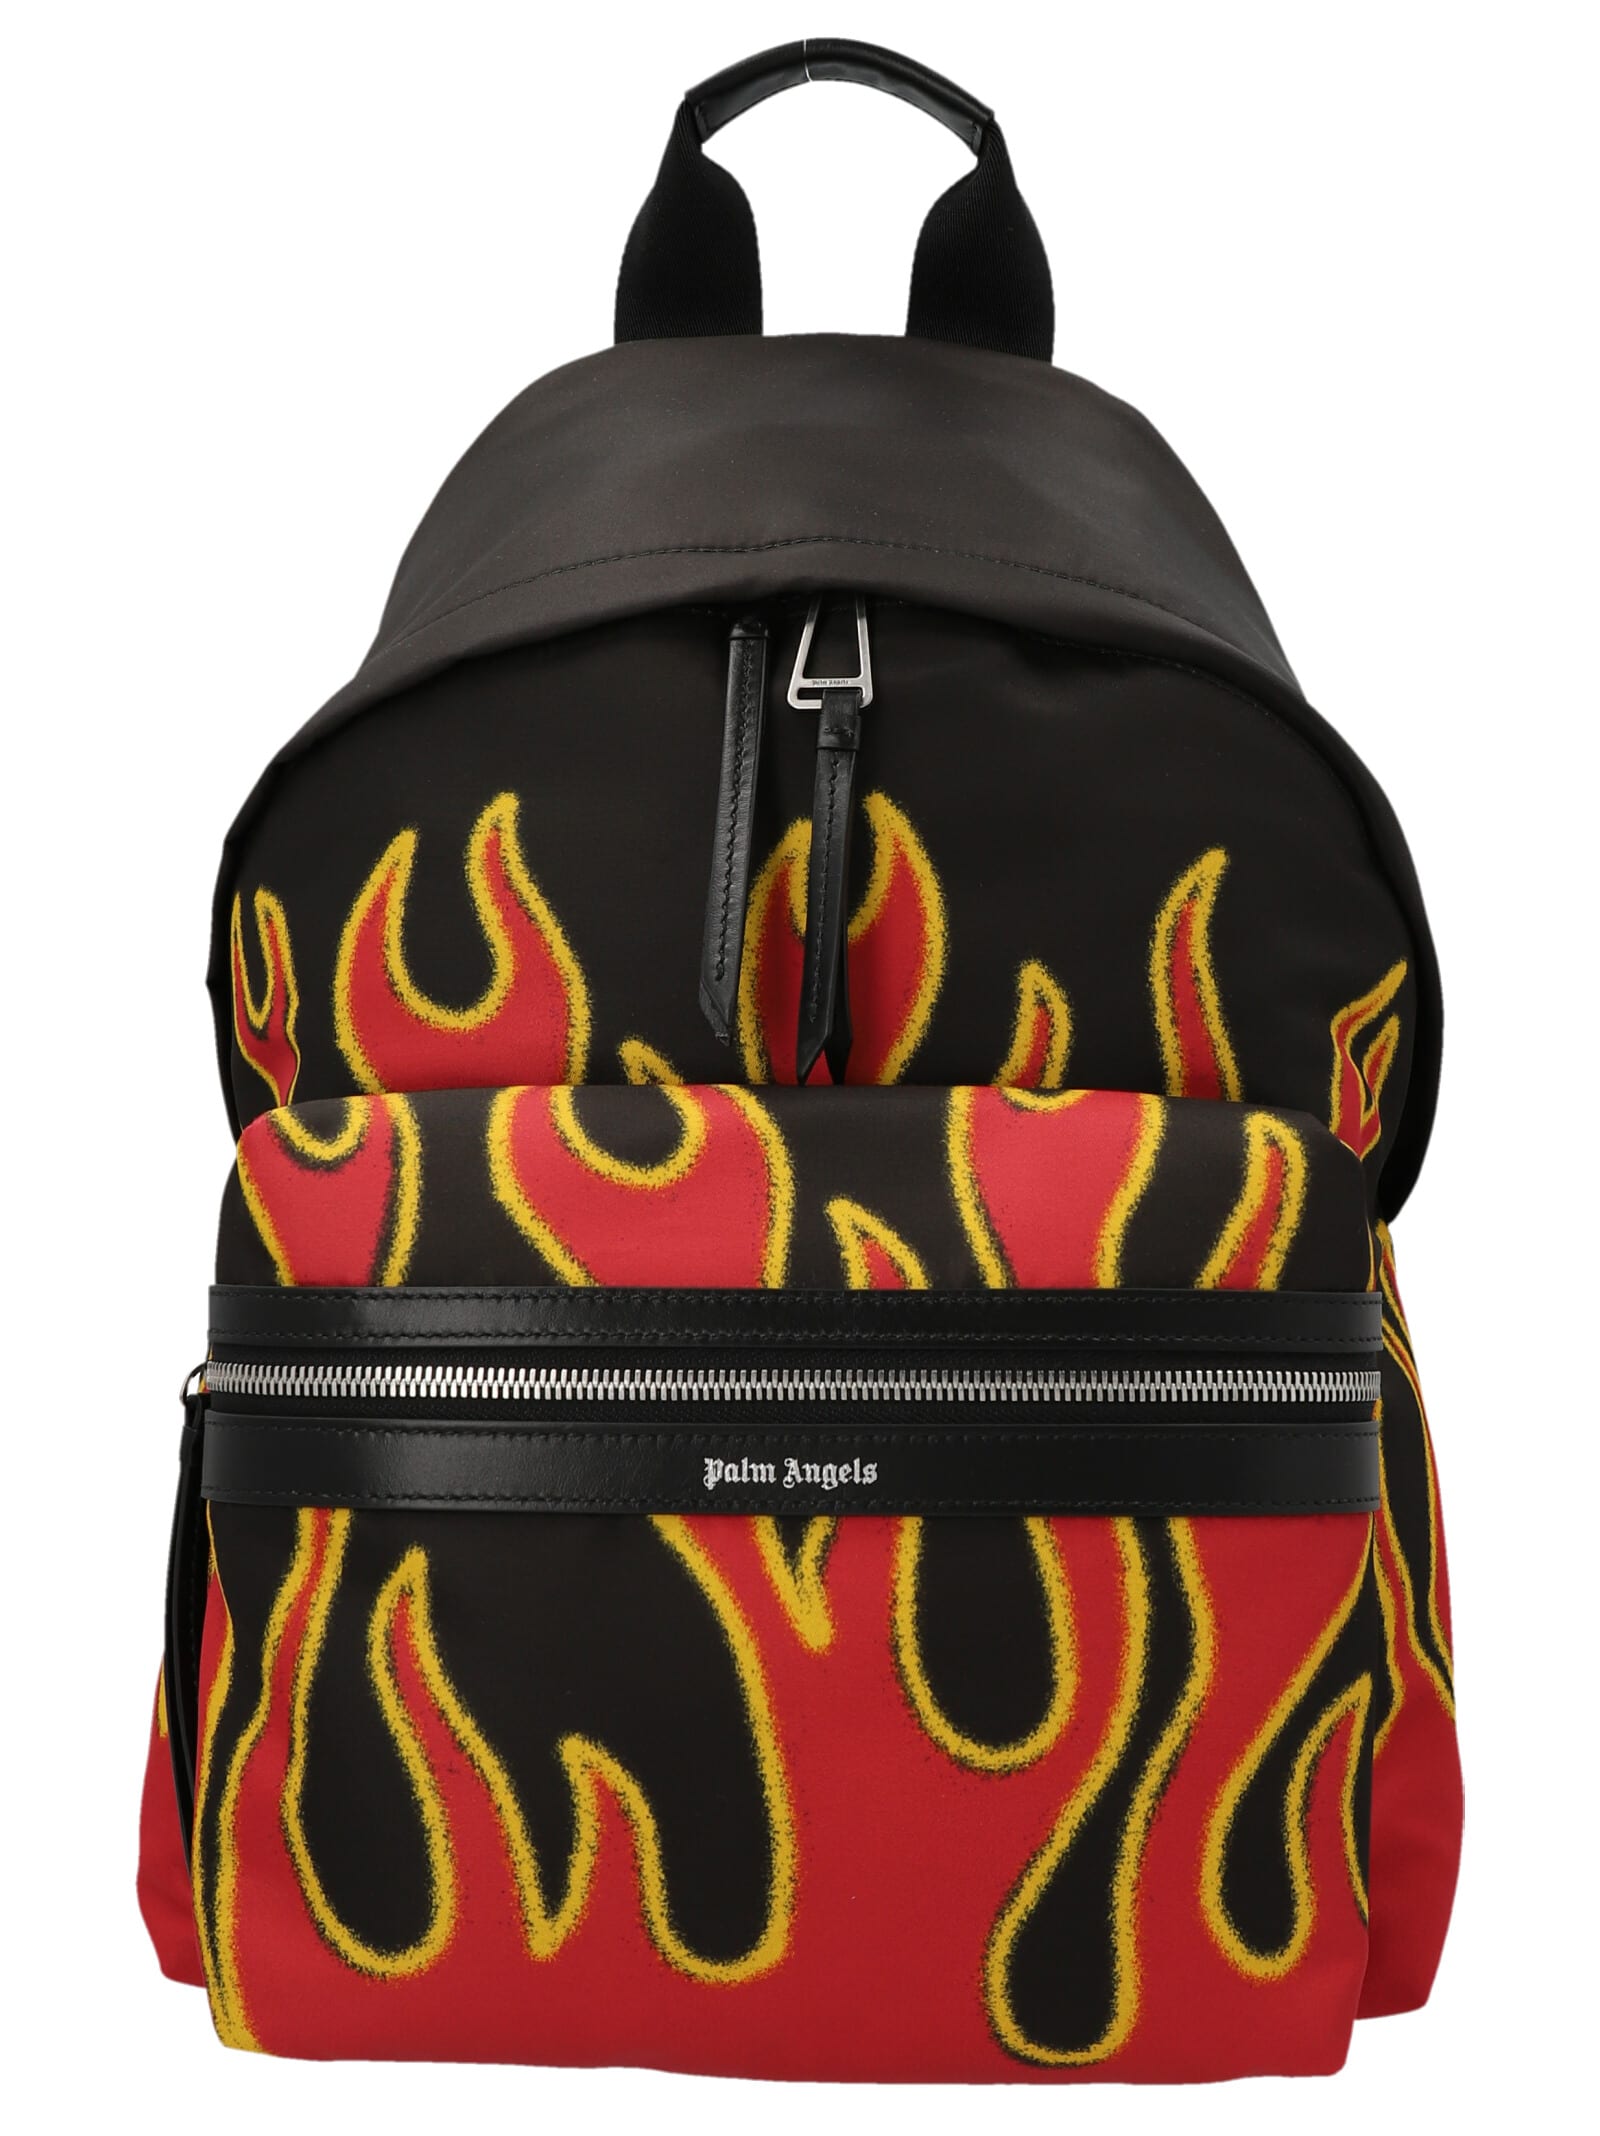 Palm Angels flames Backpack